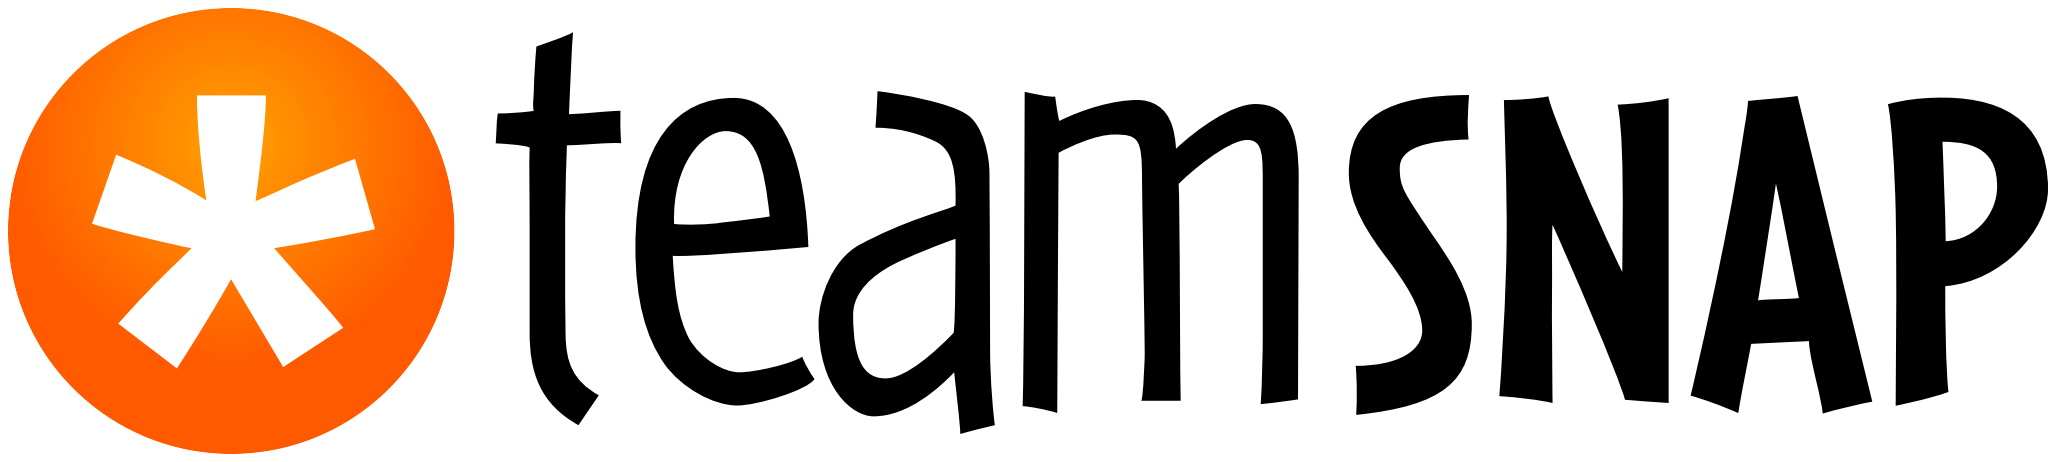 TeamSnap_Logo_horizontal